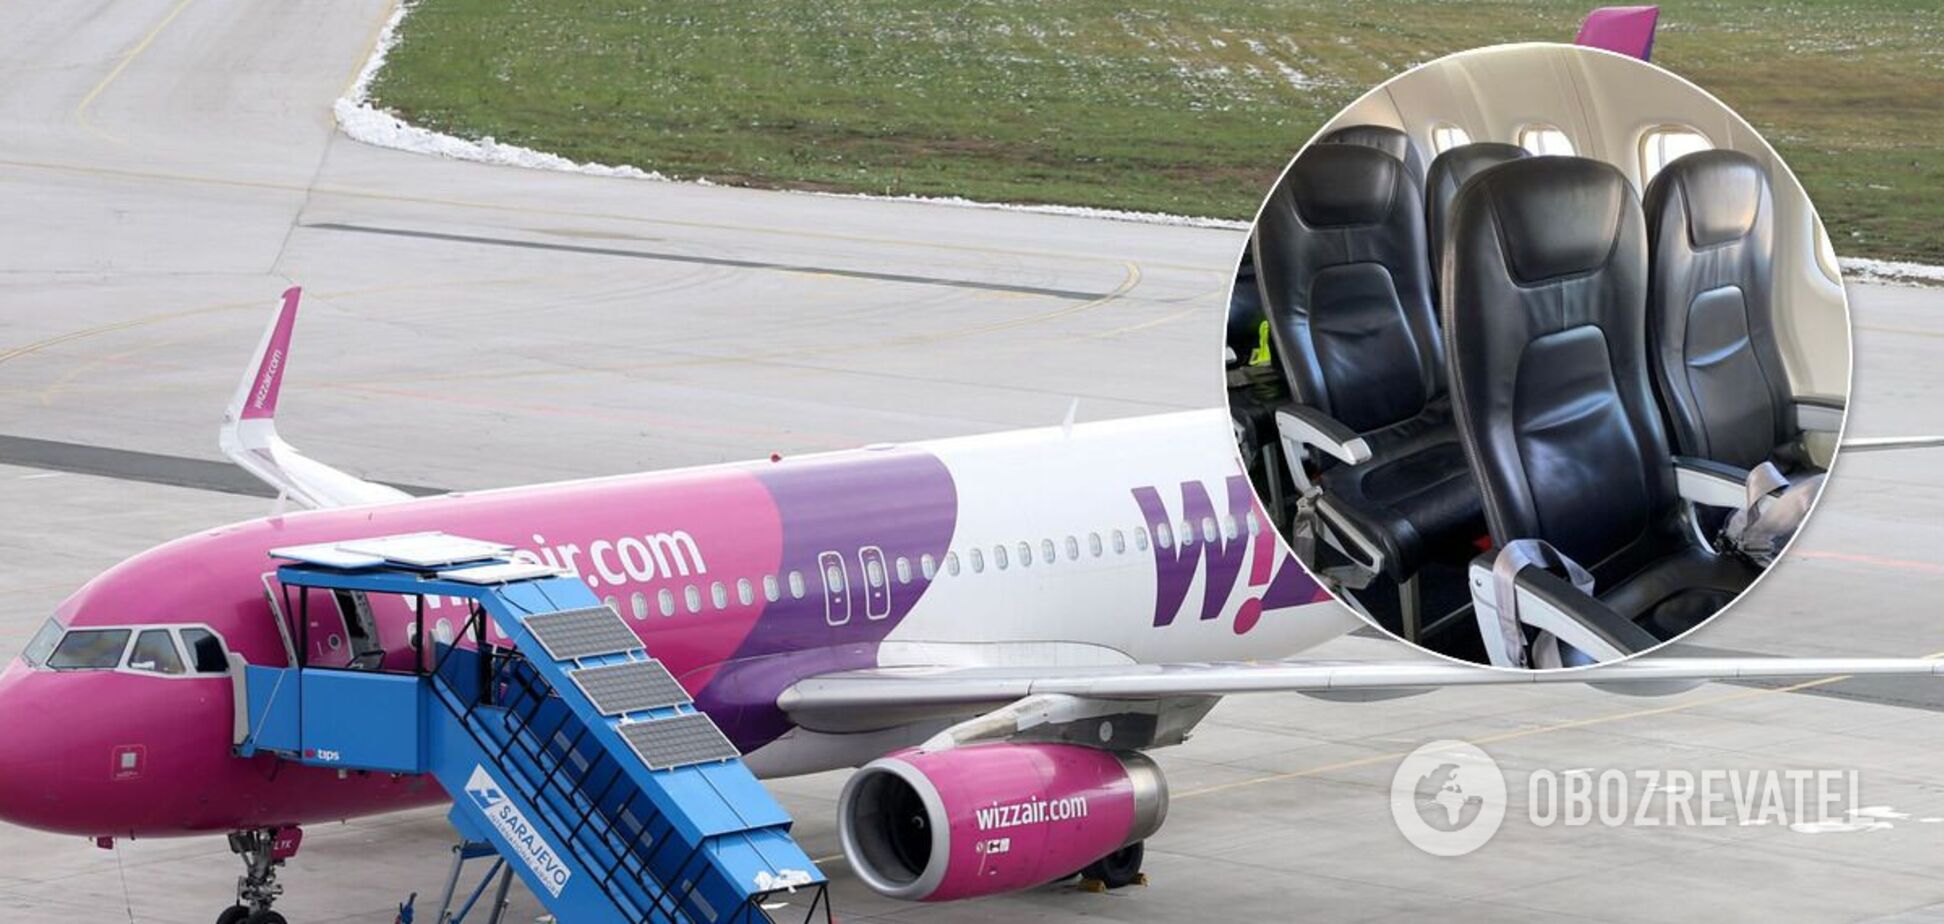 Wizz Air ввел плату за соседние места в самолете: сколько стоит услуга